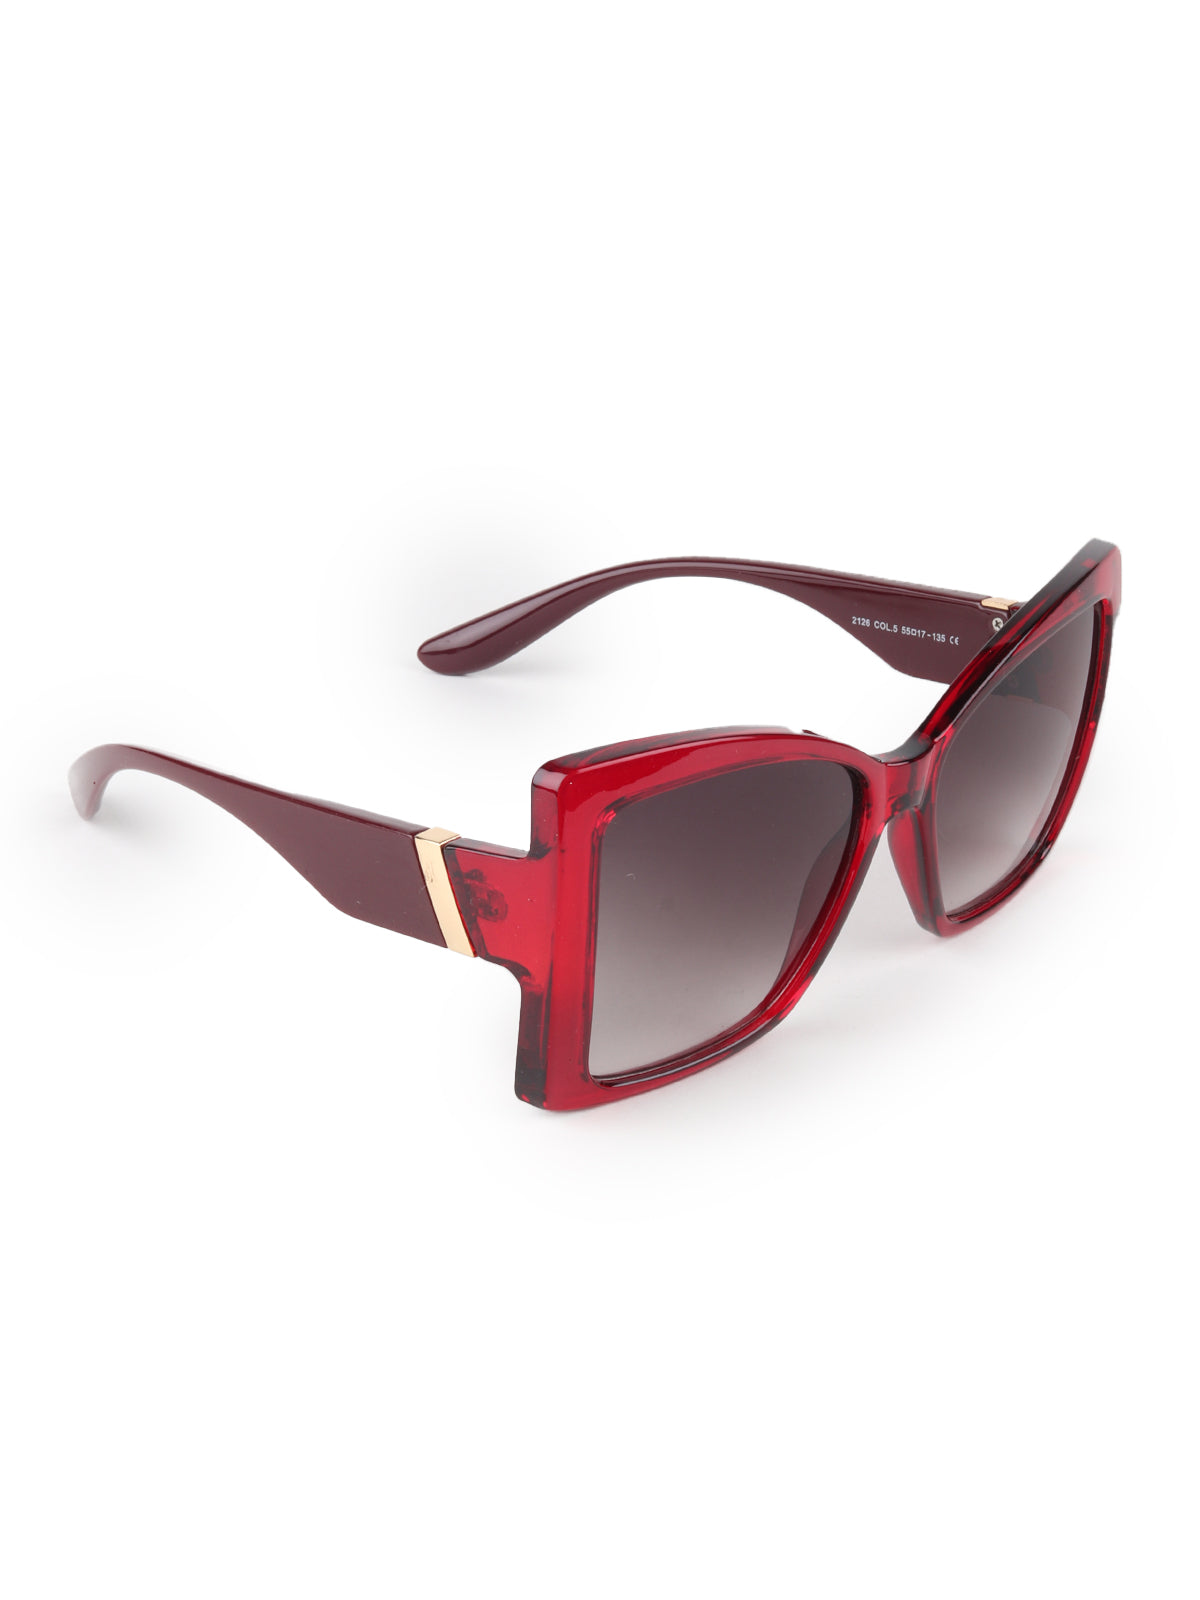 Odette Black Acrylic Cateye Sunglasses for Women